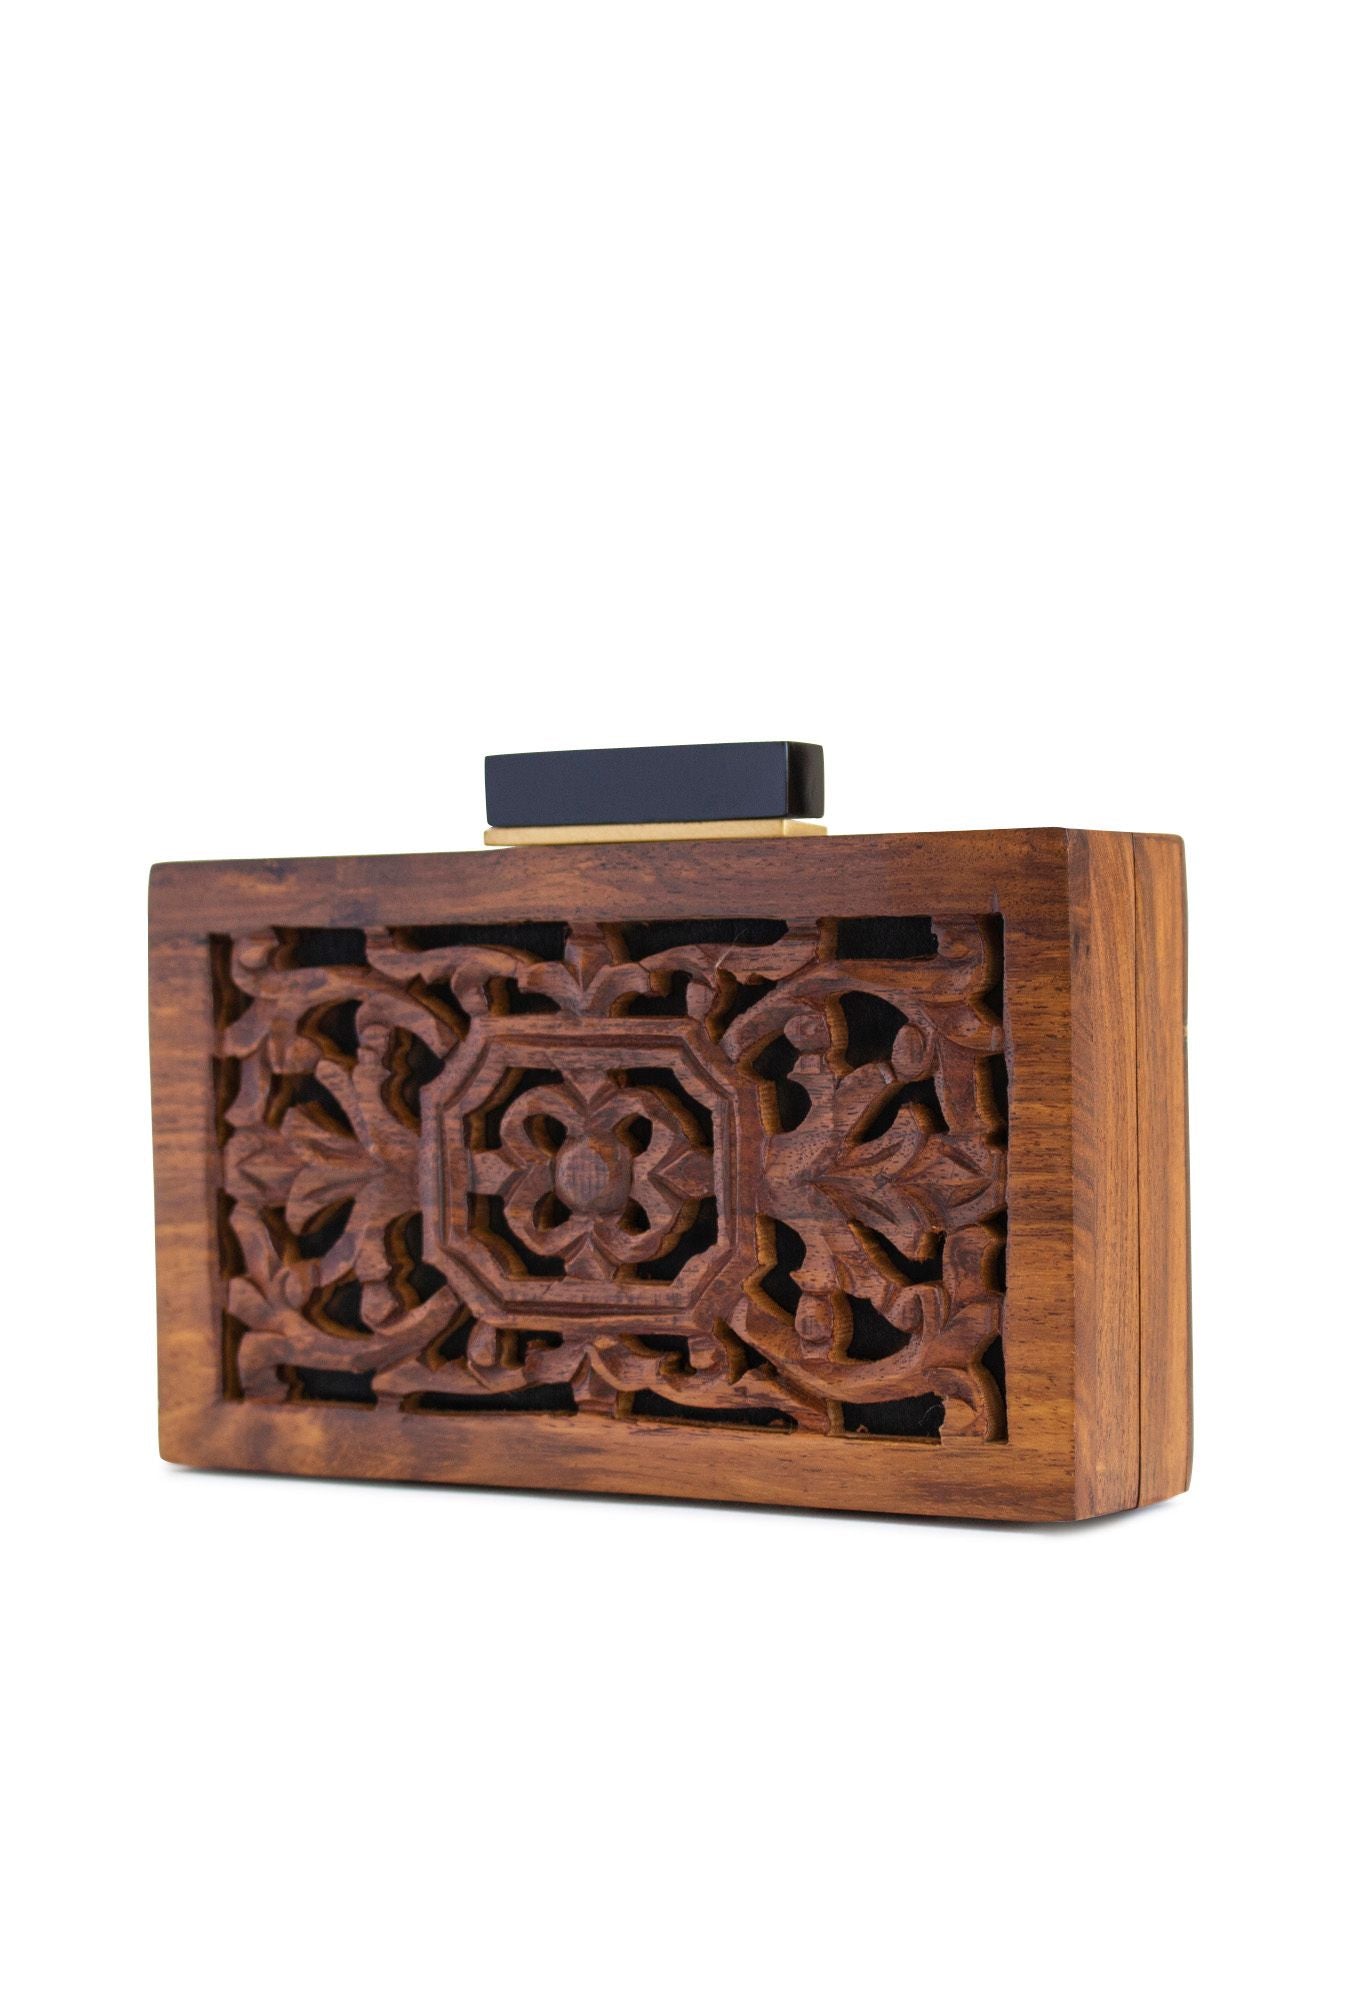 Carved Wooden Box Bag